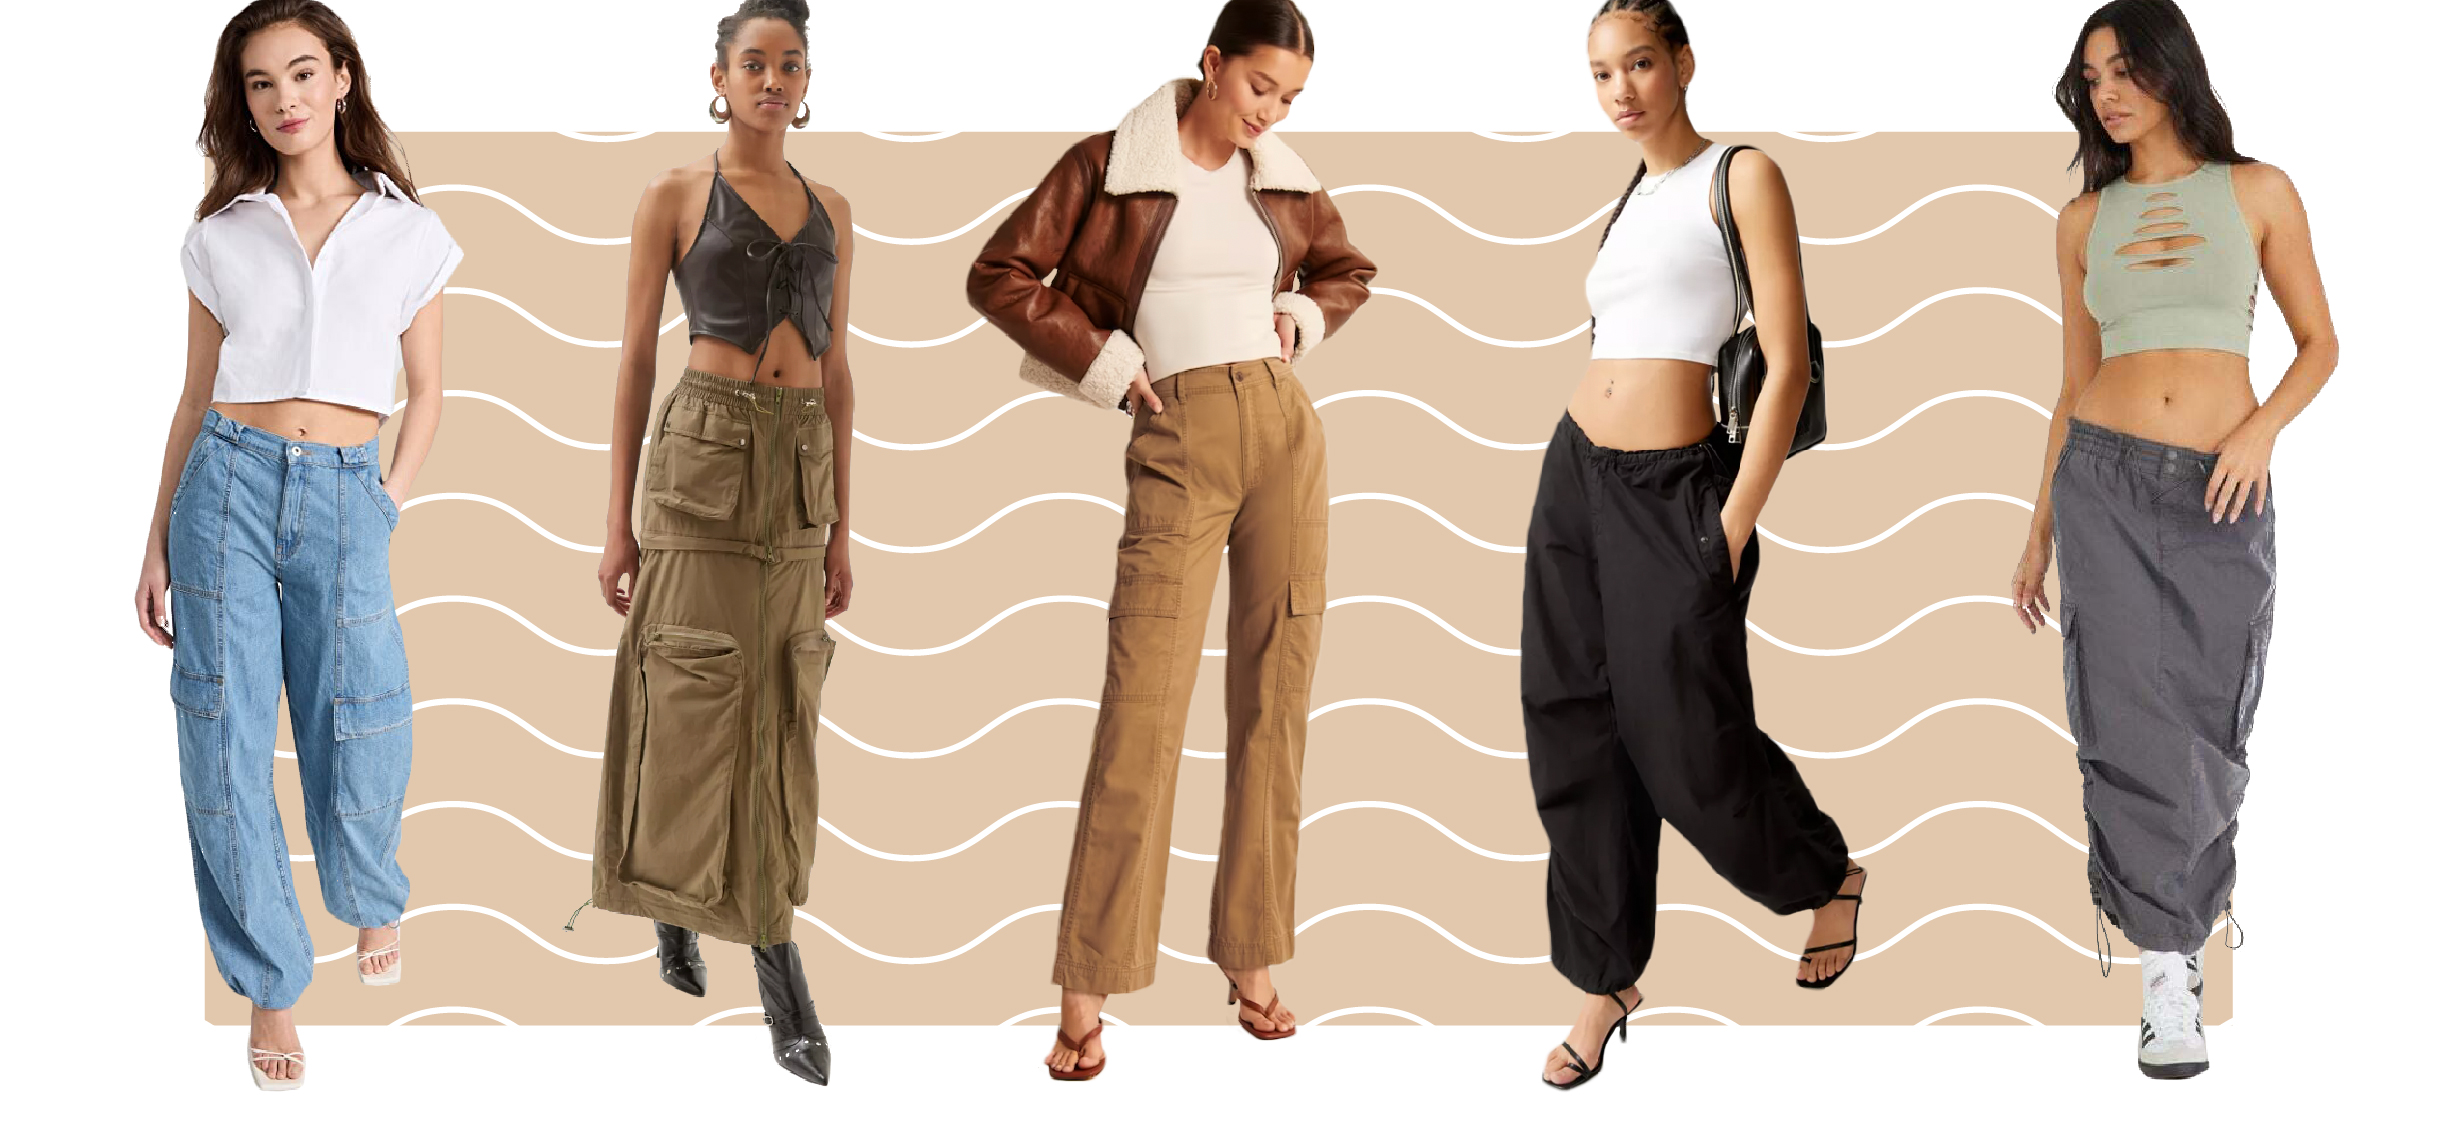 Cargo Pants For Women – Hit Pieces Of The Season #cargopants #pantsoutfit  #fashionactivation #womanfashion #fashionou…